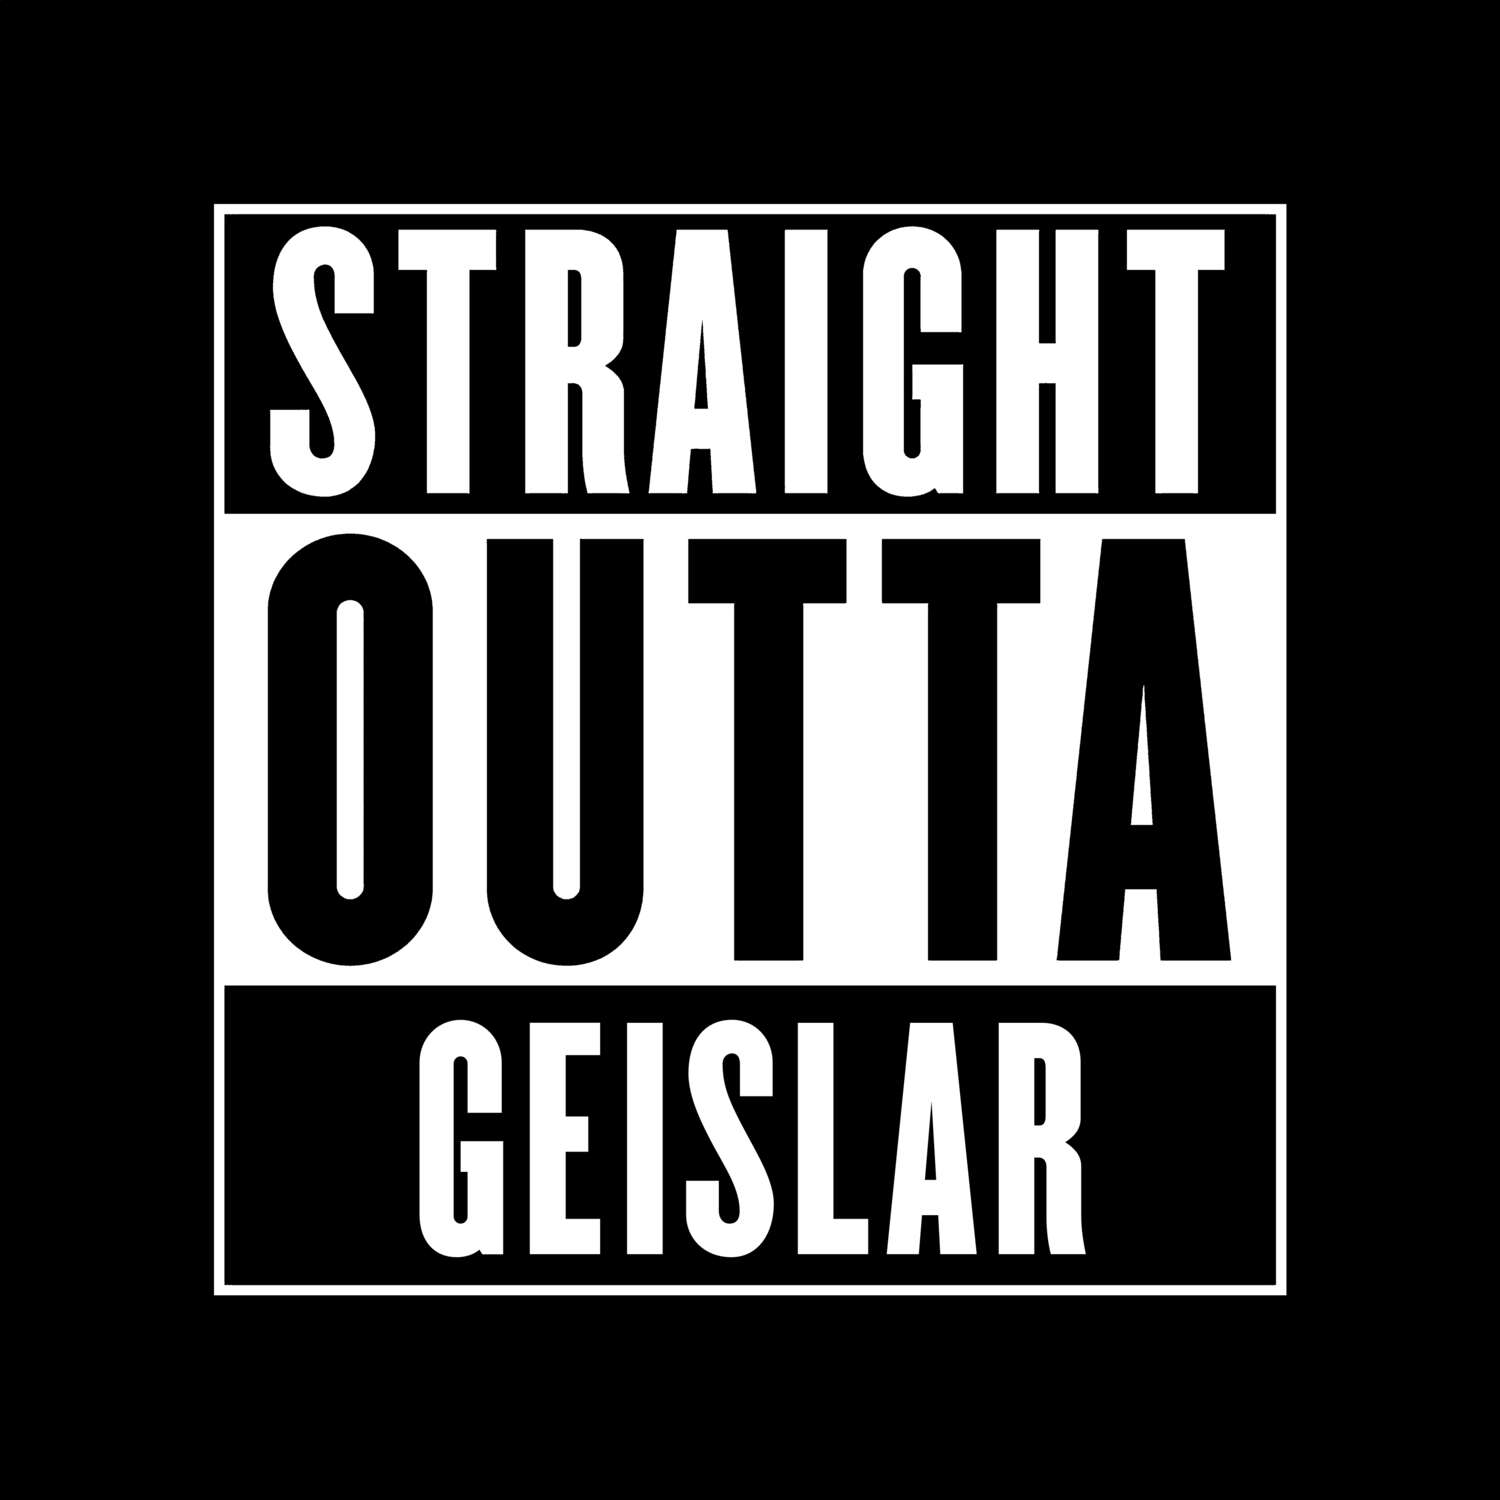 Geislar T-Shirt »Straight Outta«